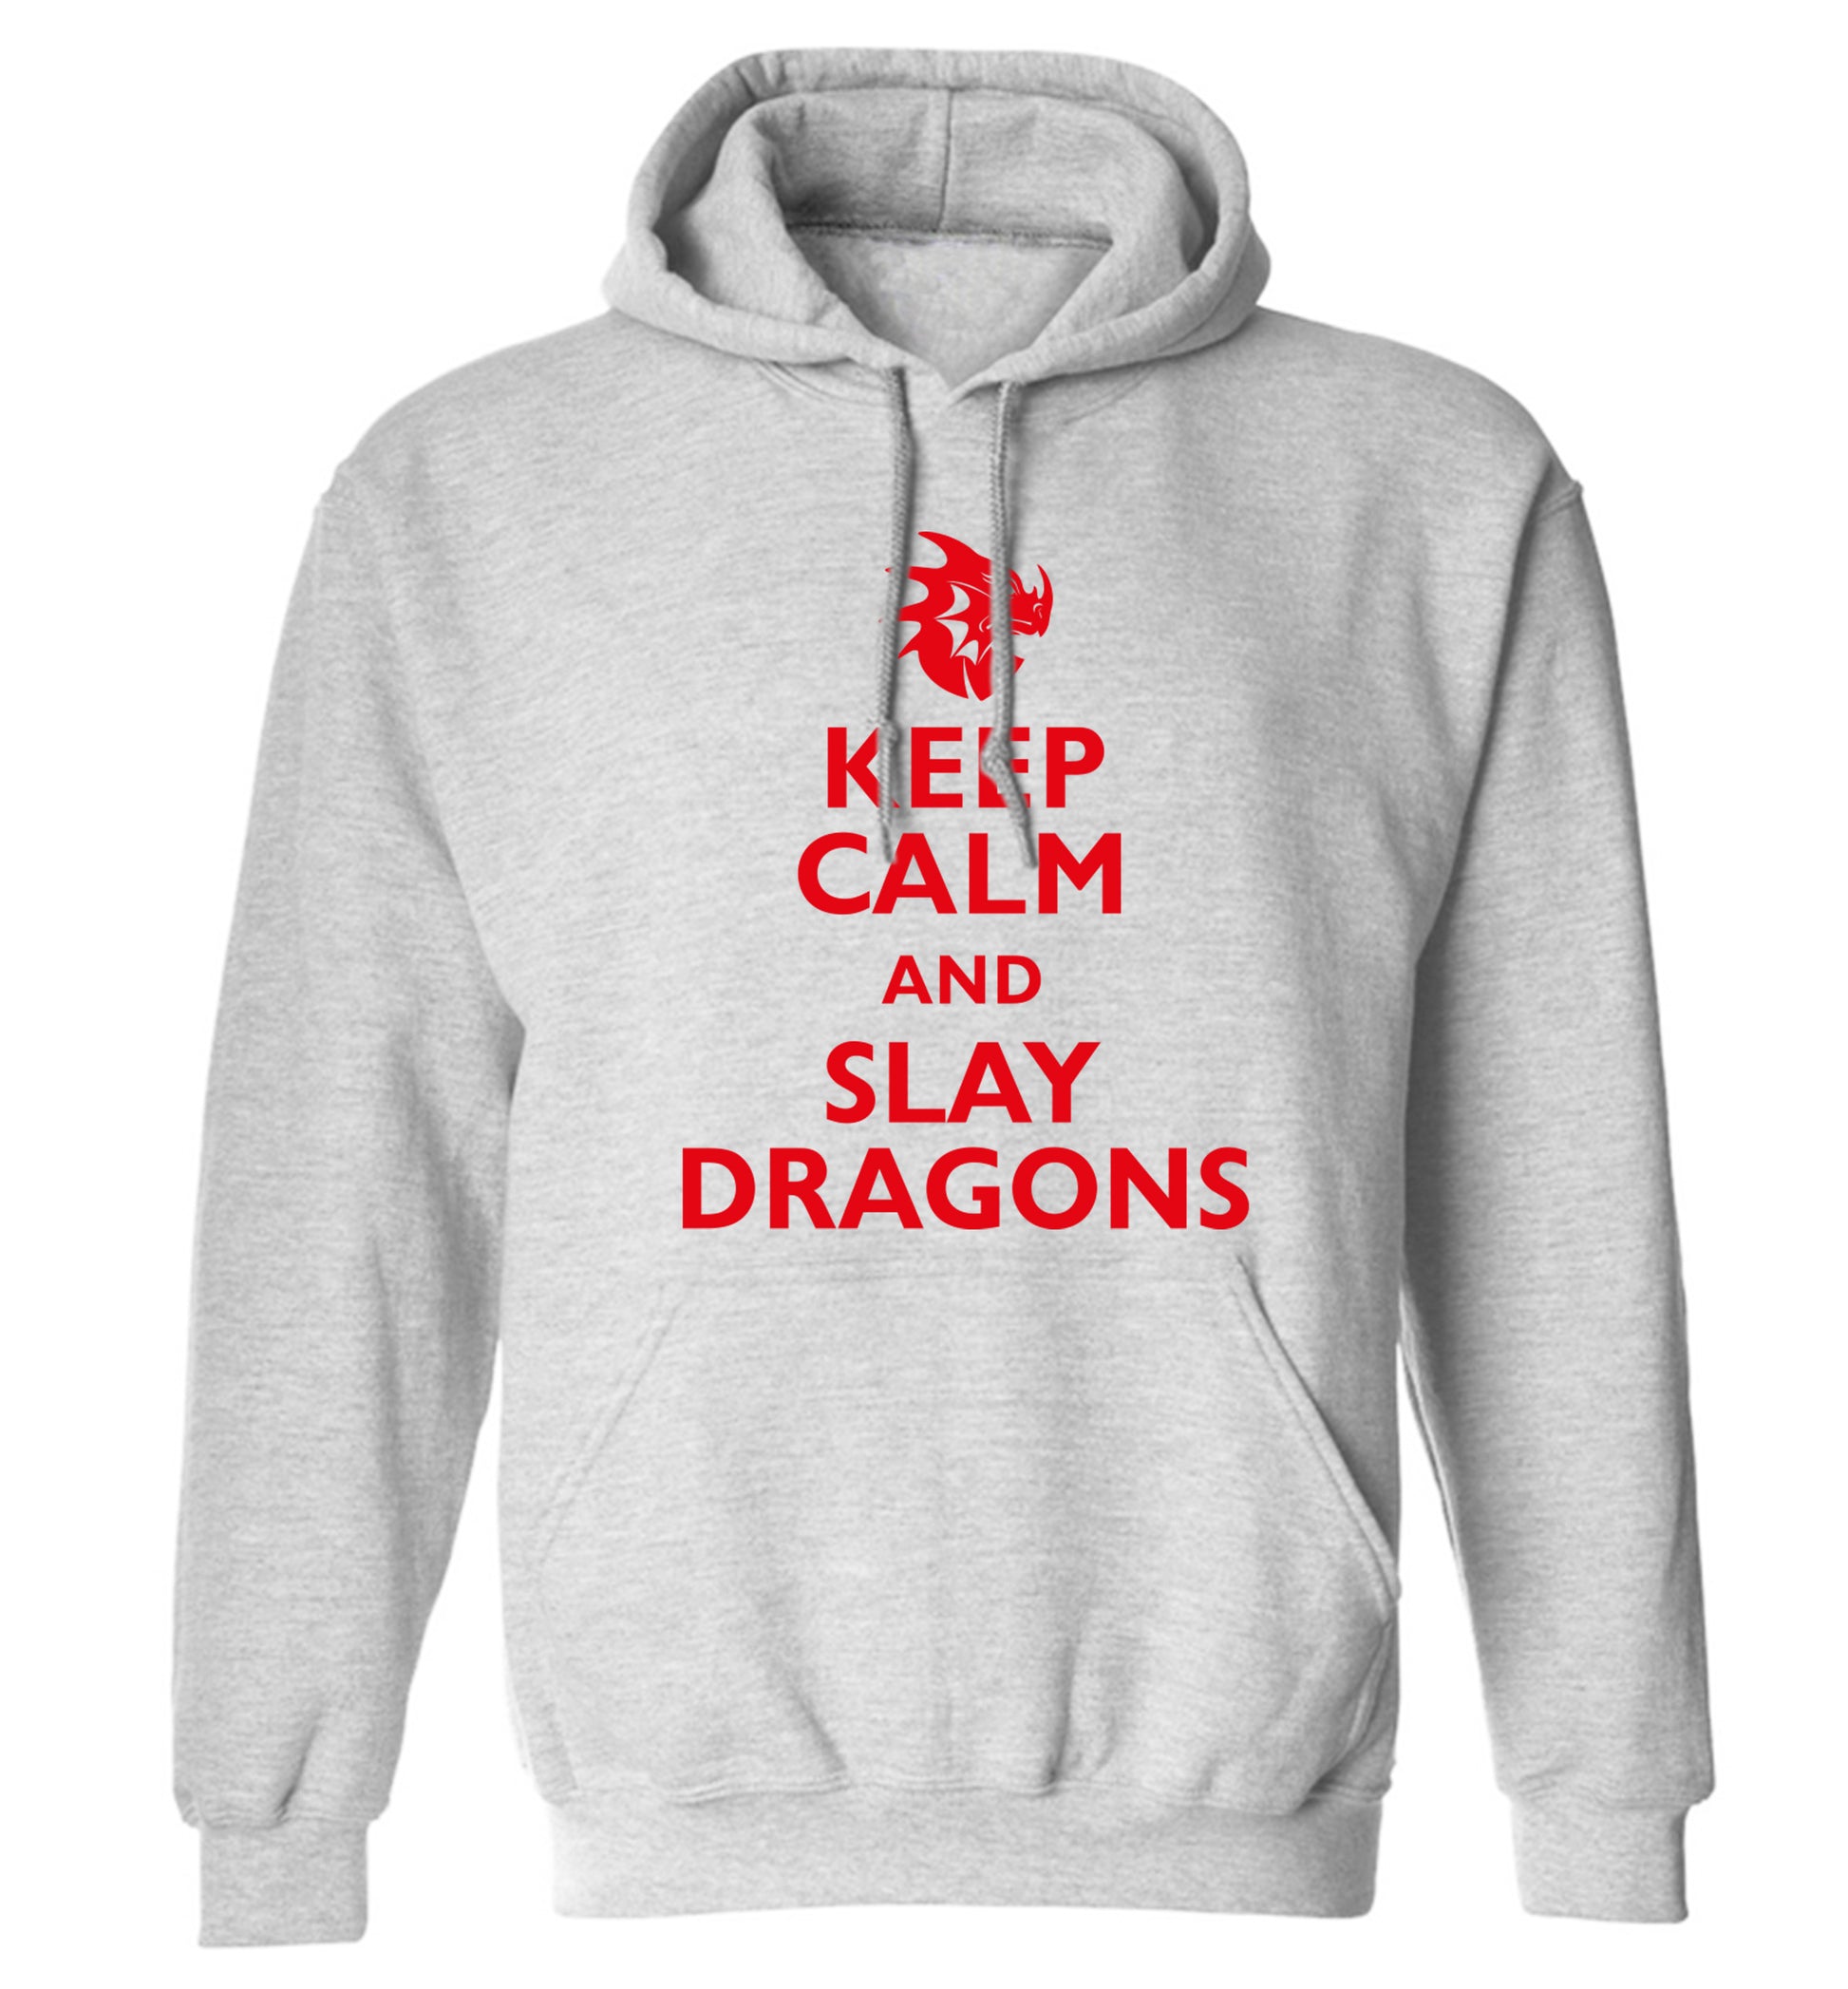 Keep calm and slay dragons adults unisex grey hoodie 2XL